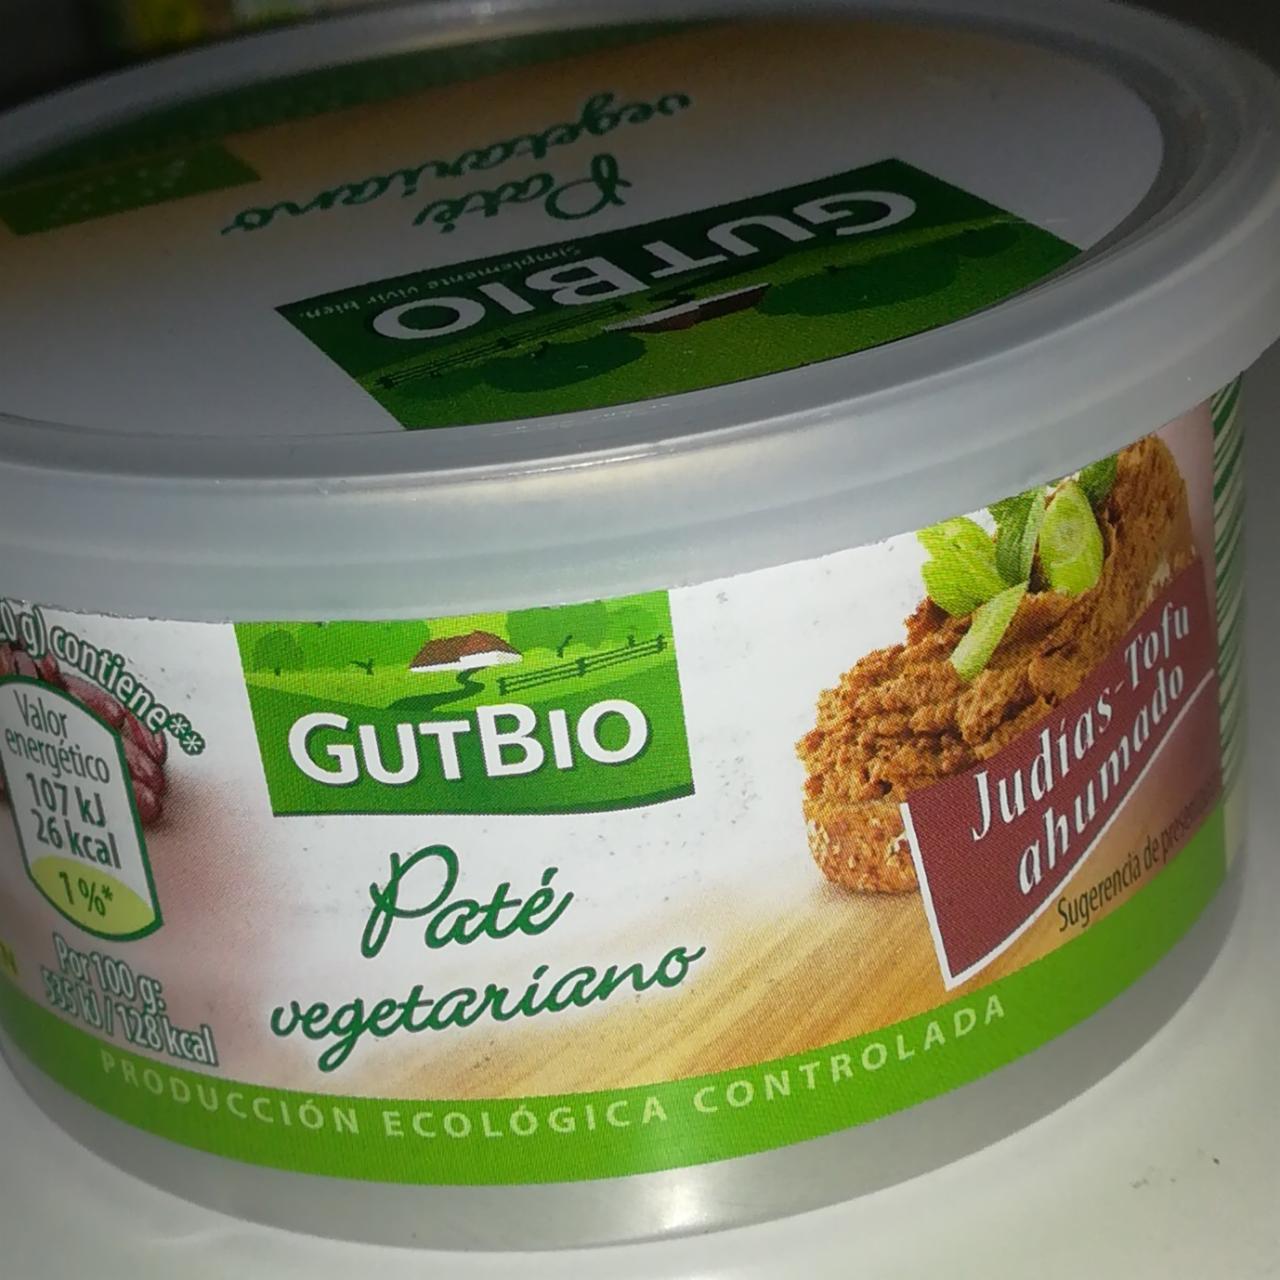 Fotografie - Paté vegetariano Judias Tofu ahumado GutBio